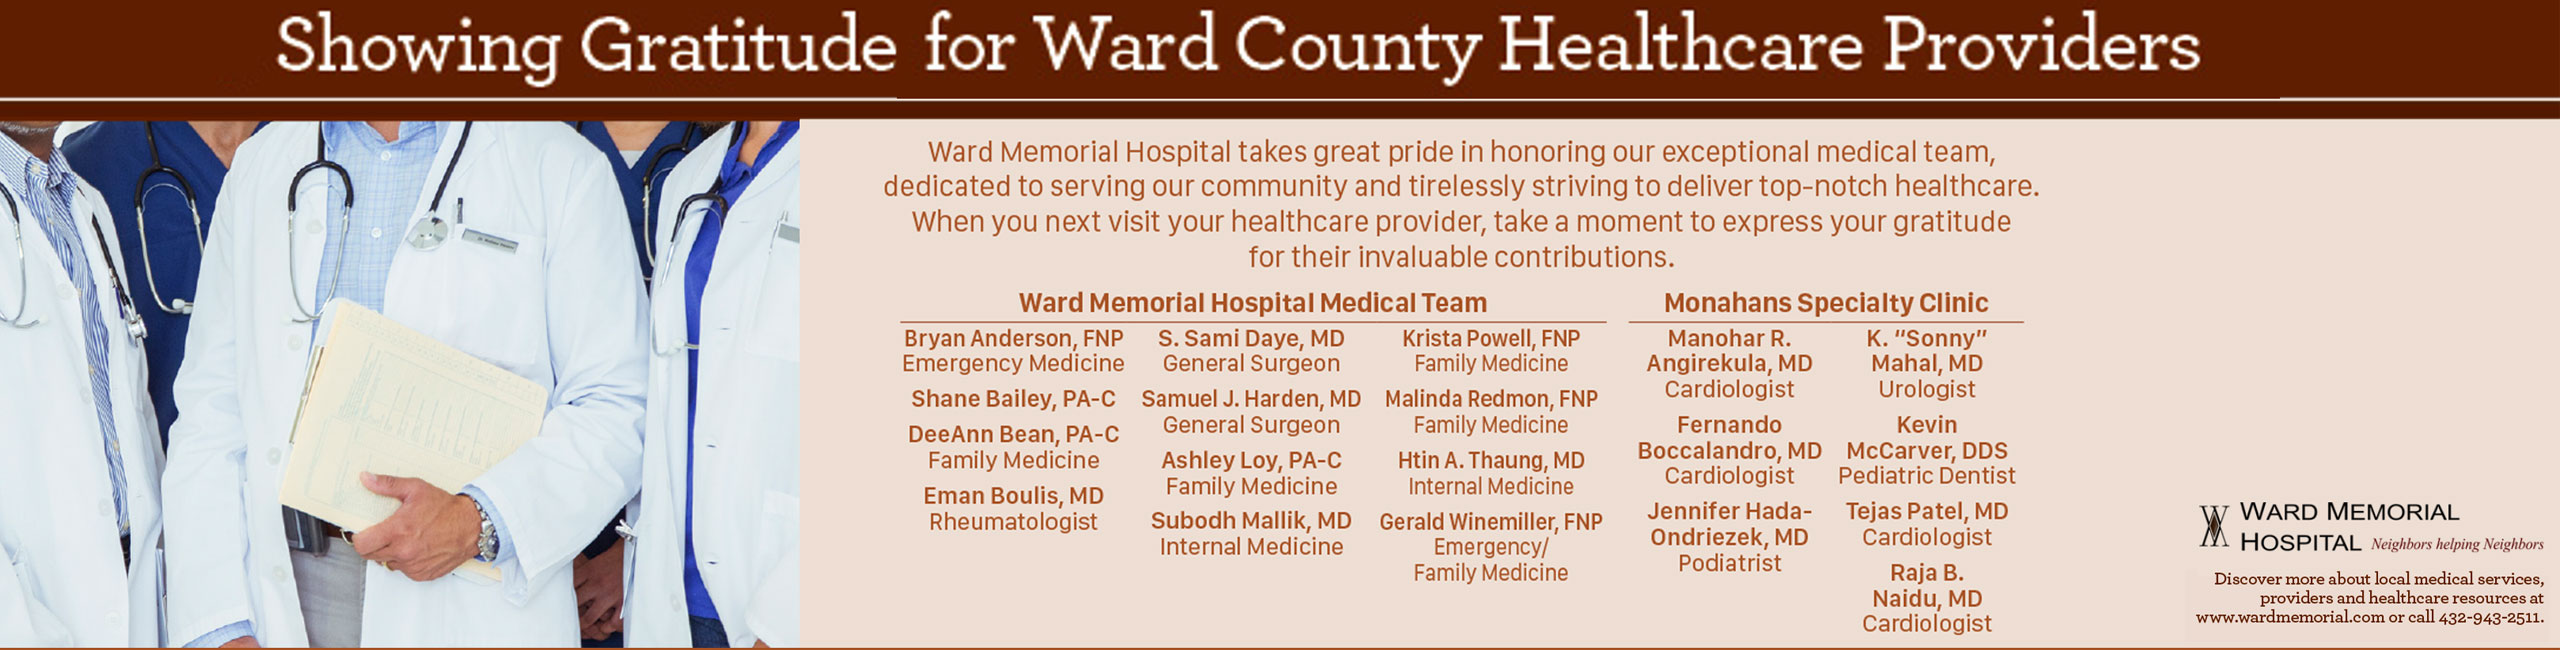 Ward Memorials gratitude ad for their providers